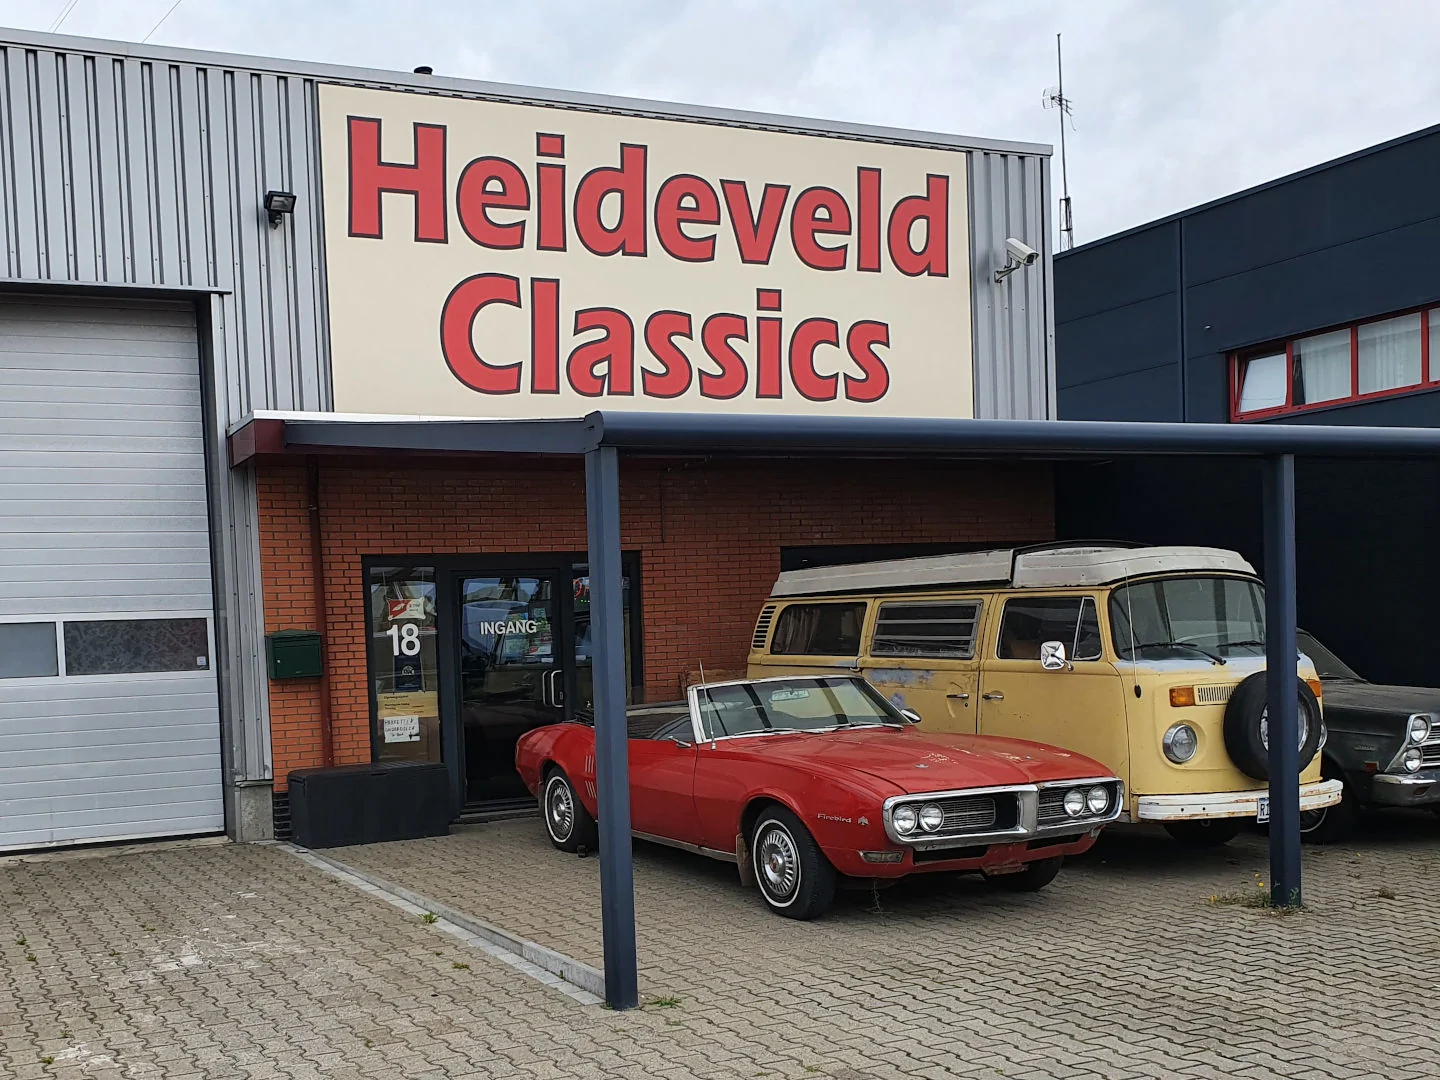 Heideveld Classics - Contact